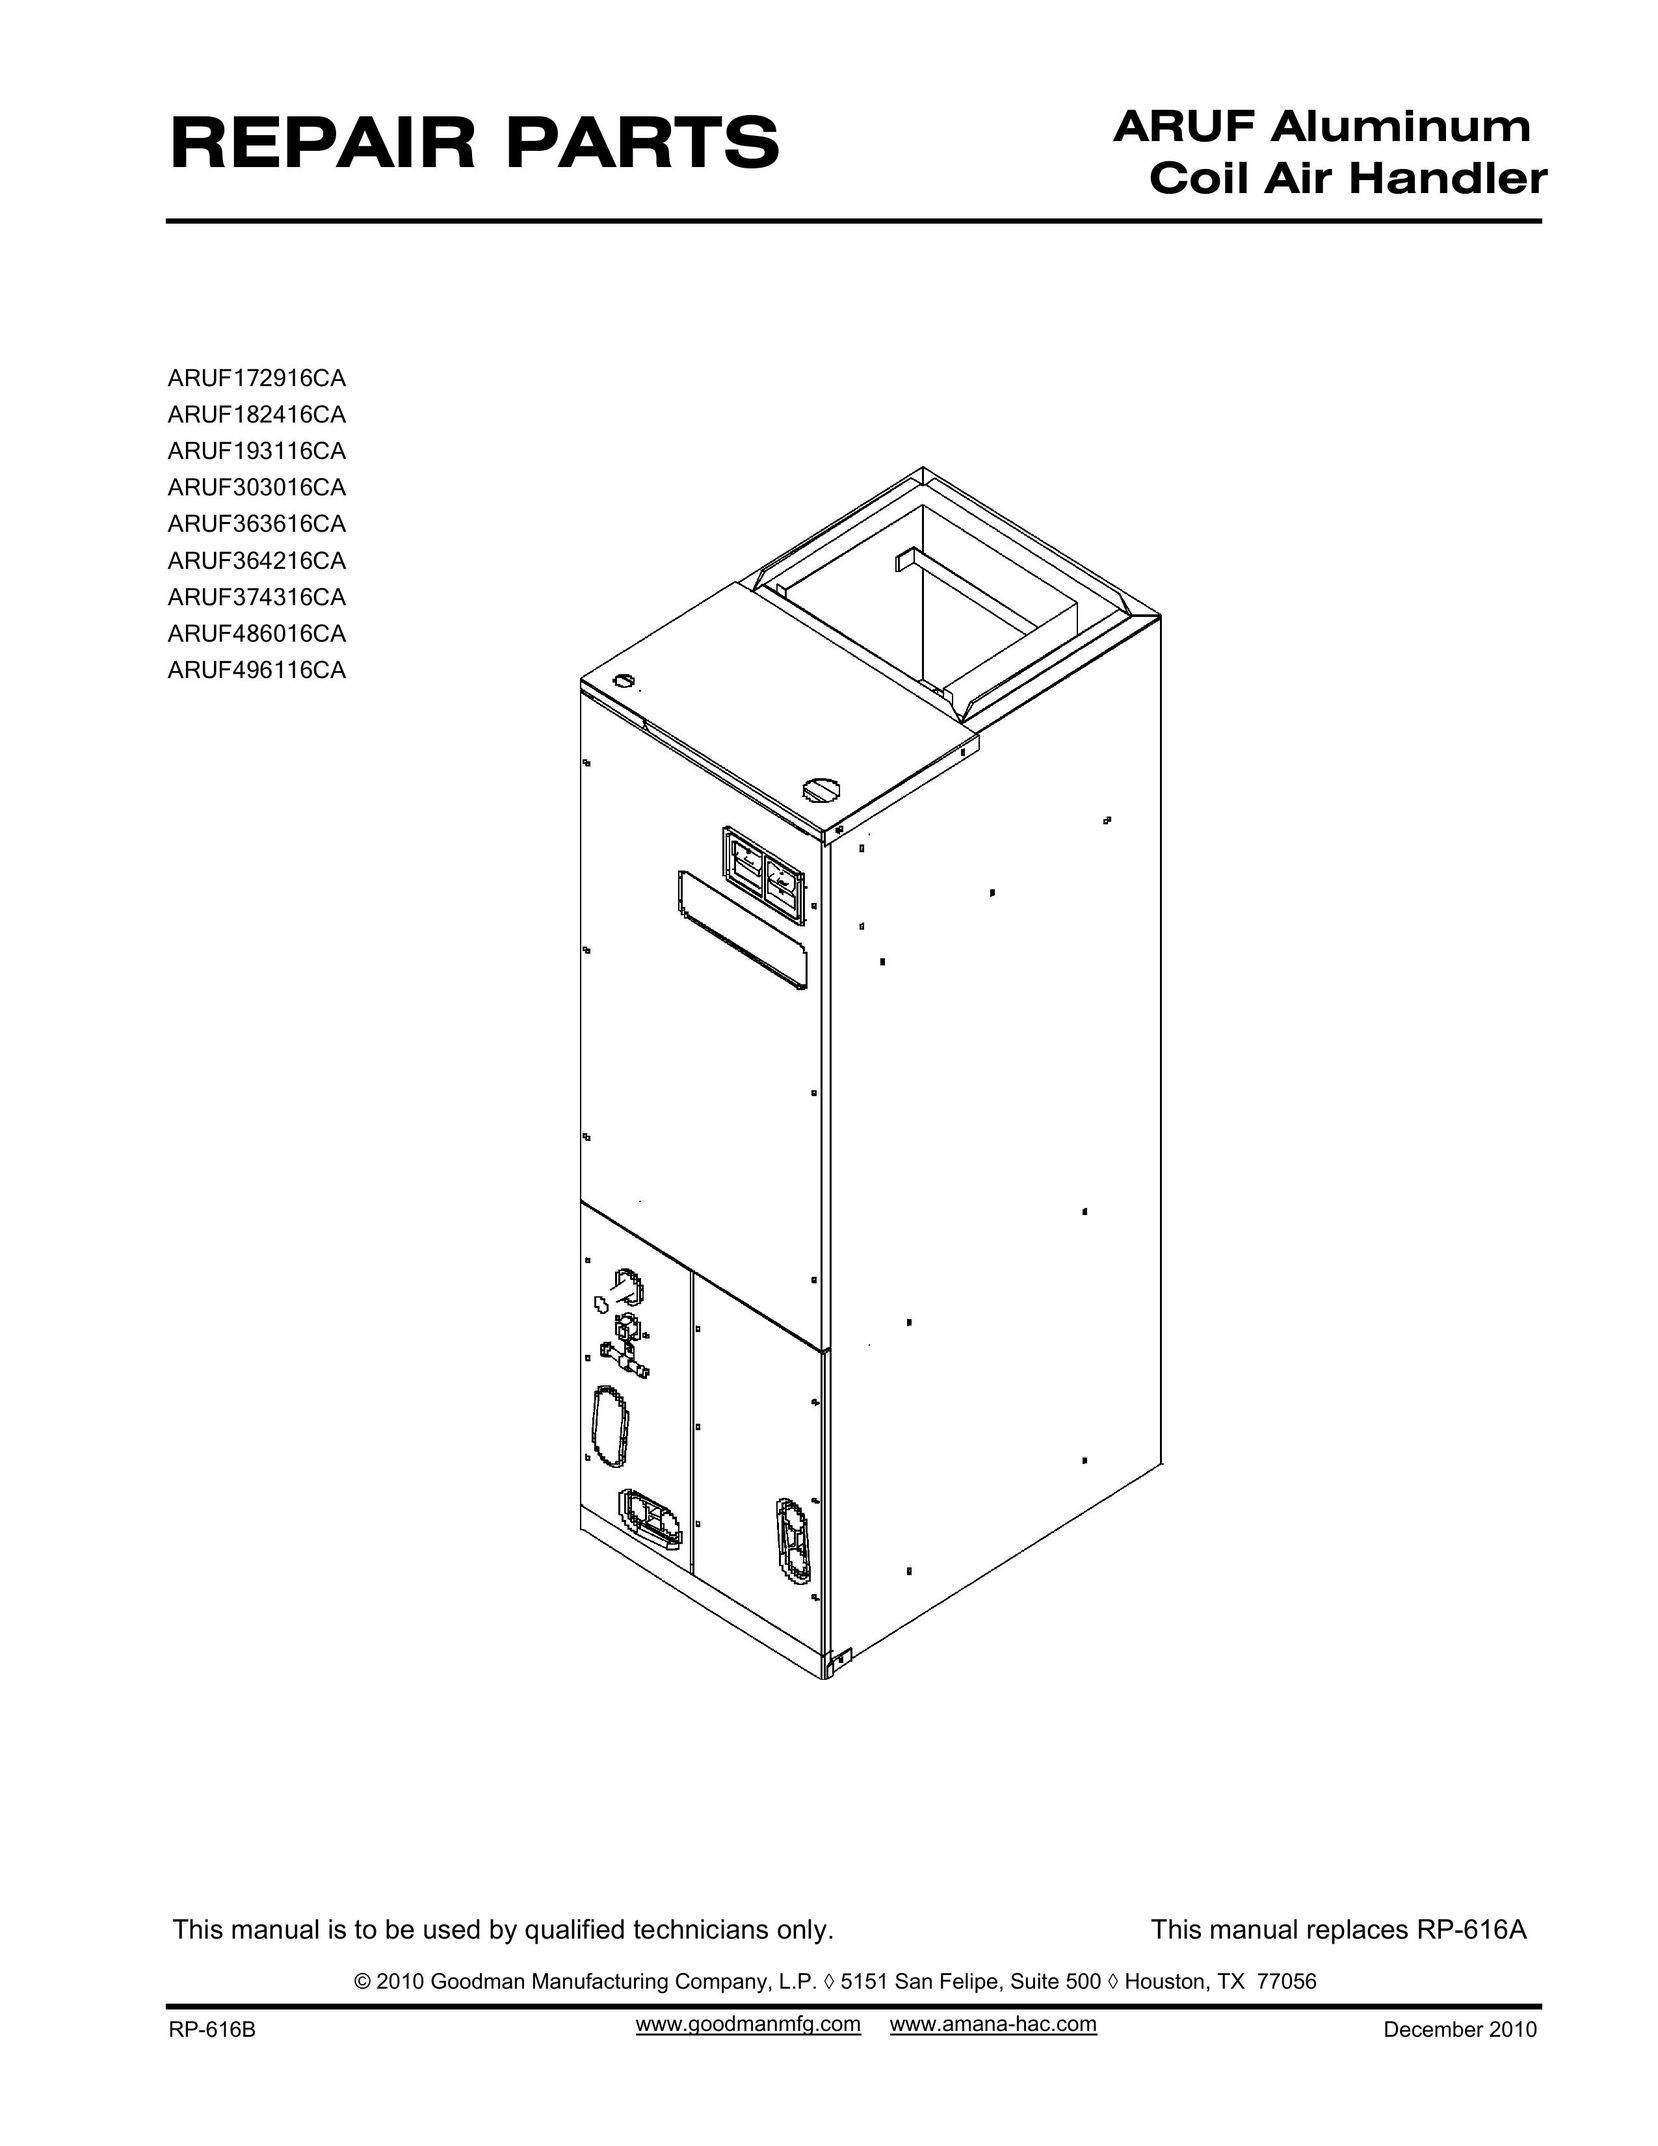 Goodman Mfg ARUF182416CA Air Conditioner User Manual